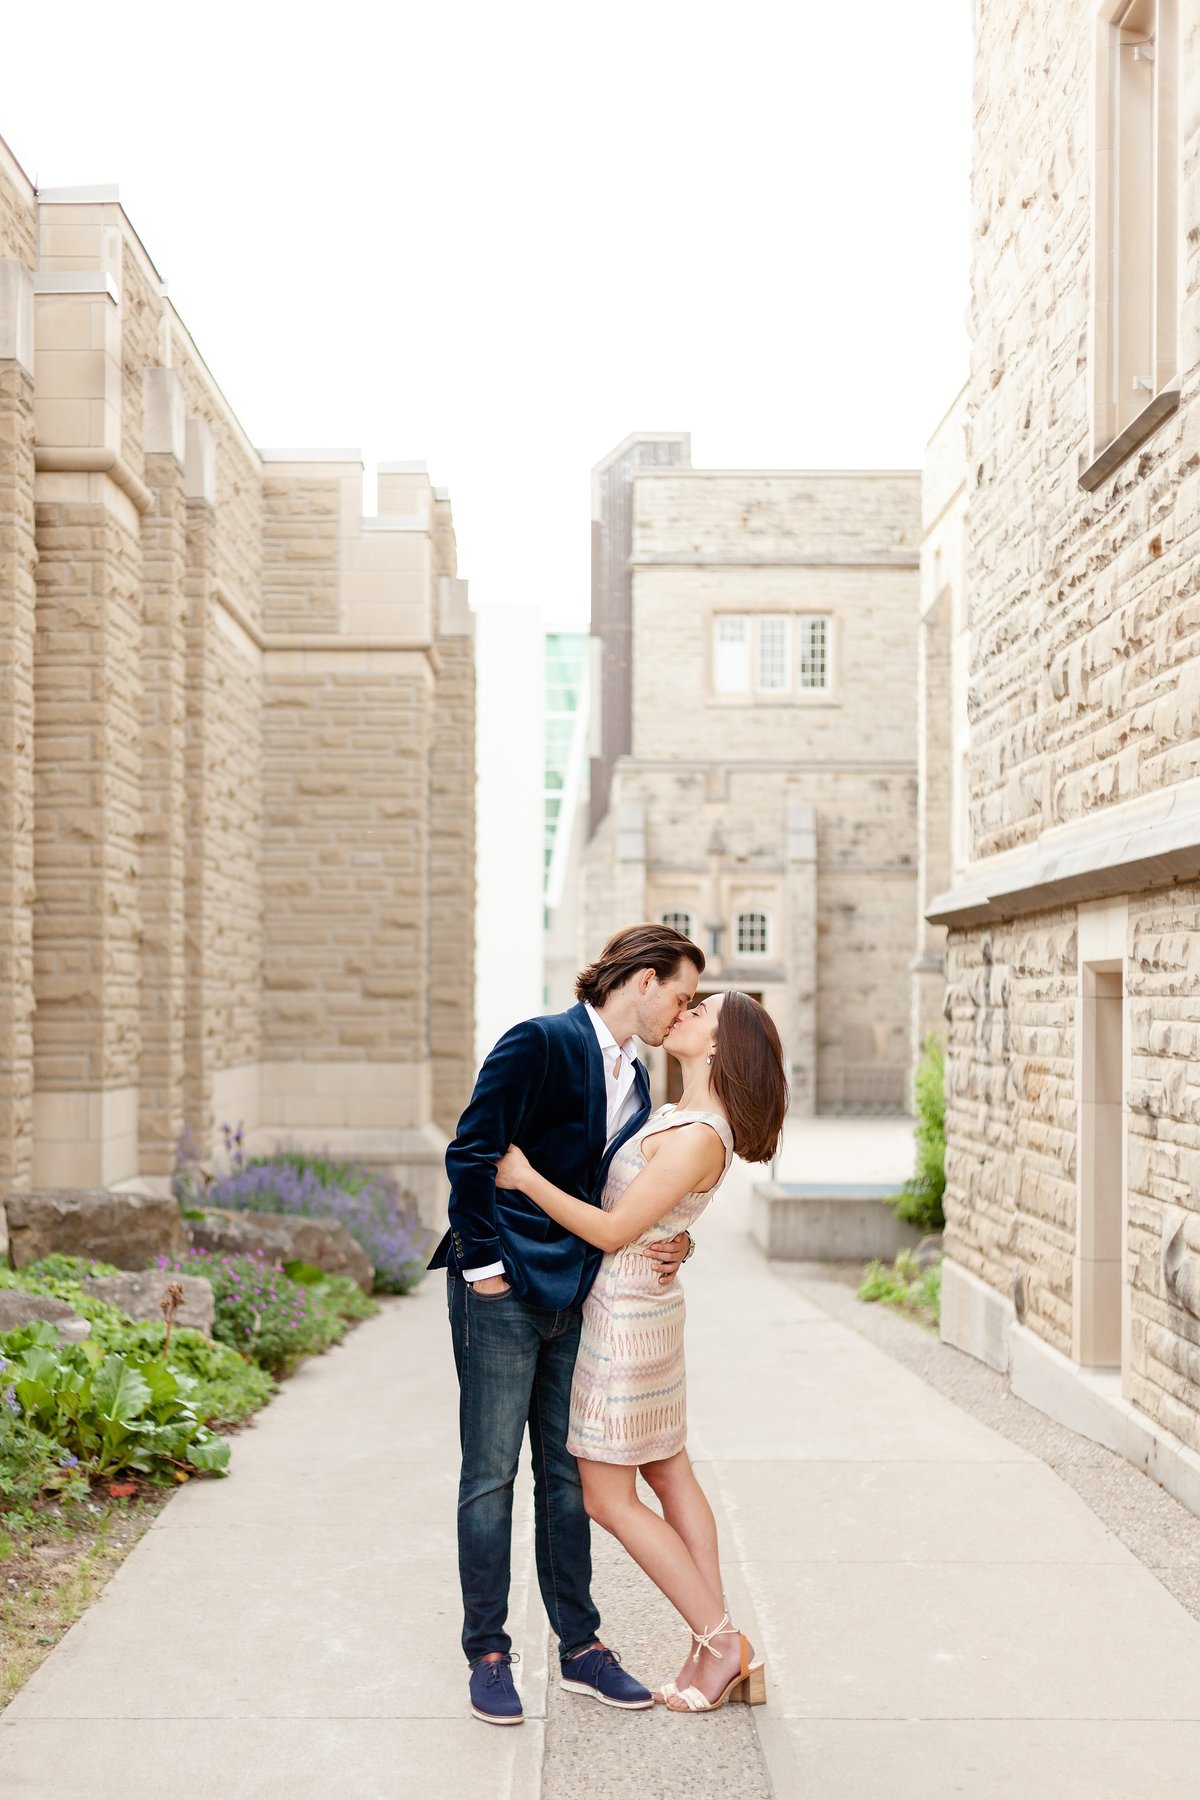 Guys-dips-his-fiance-back-in-a-romantic-walkway-between-buildings-at-western-university-in-london-ontario